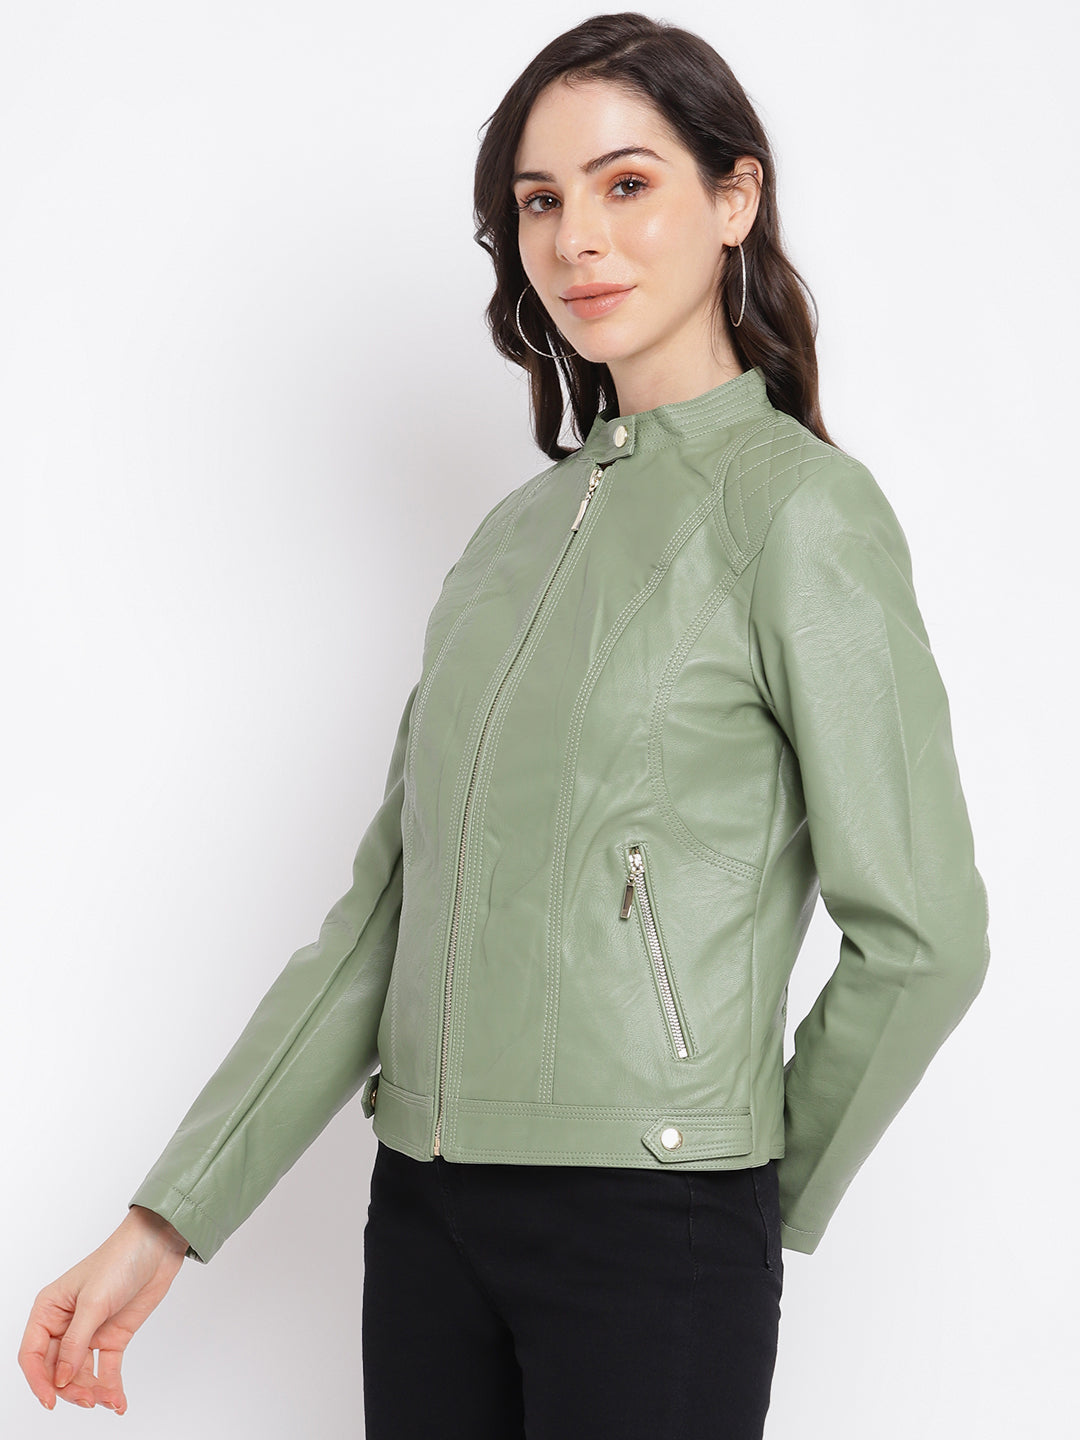 Green Full Sleeve Biker Jacket